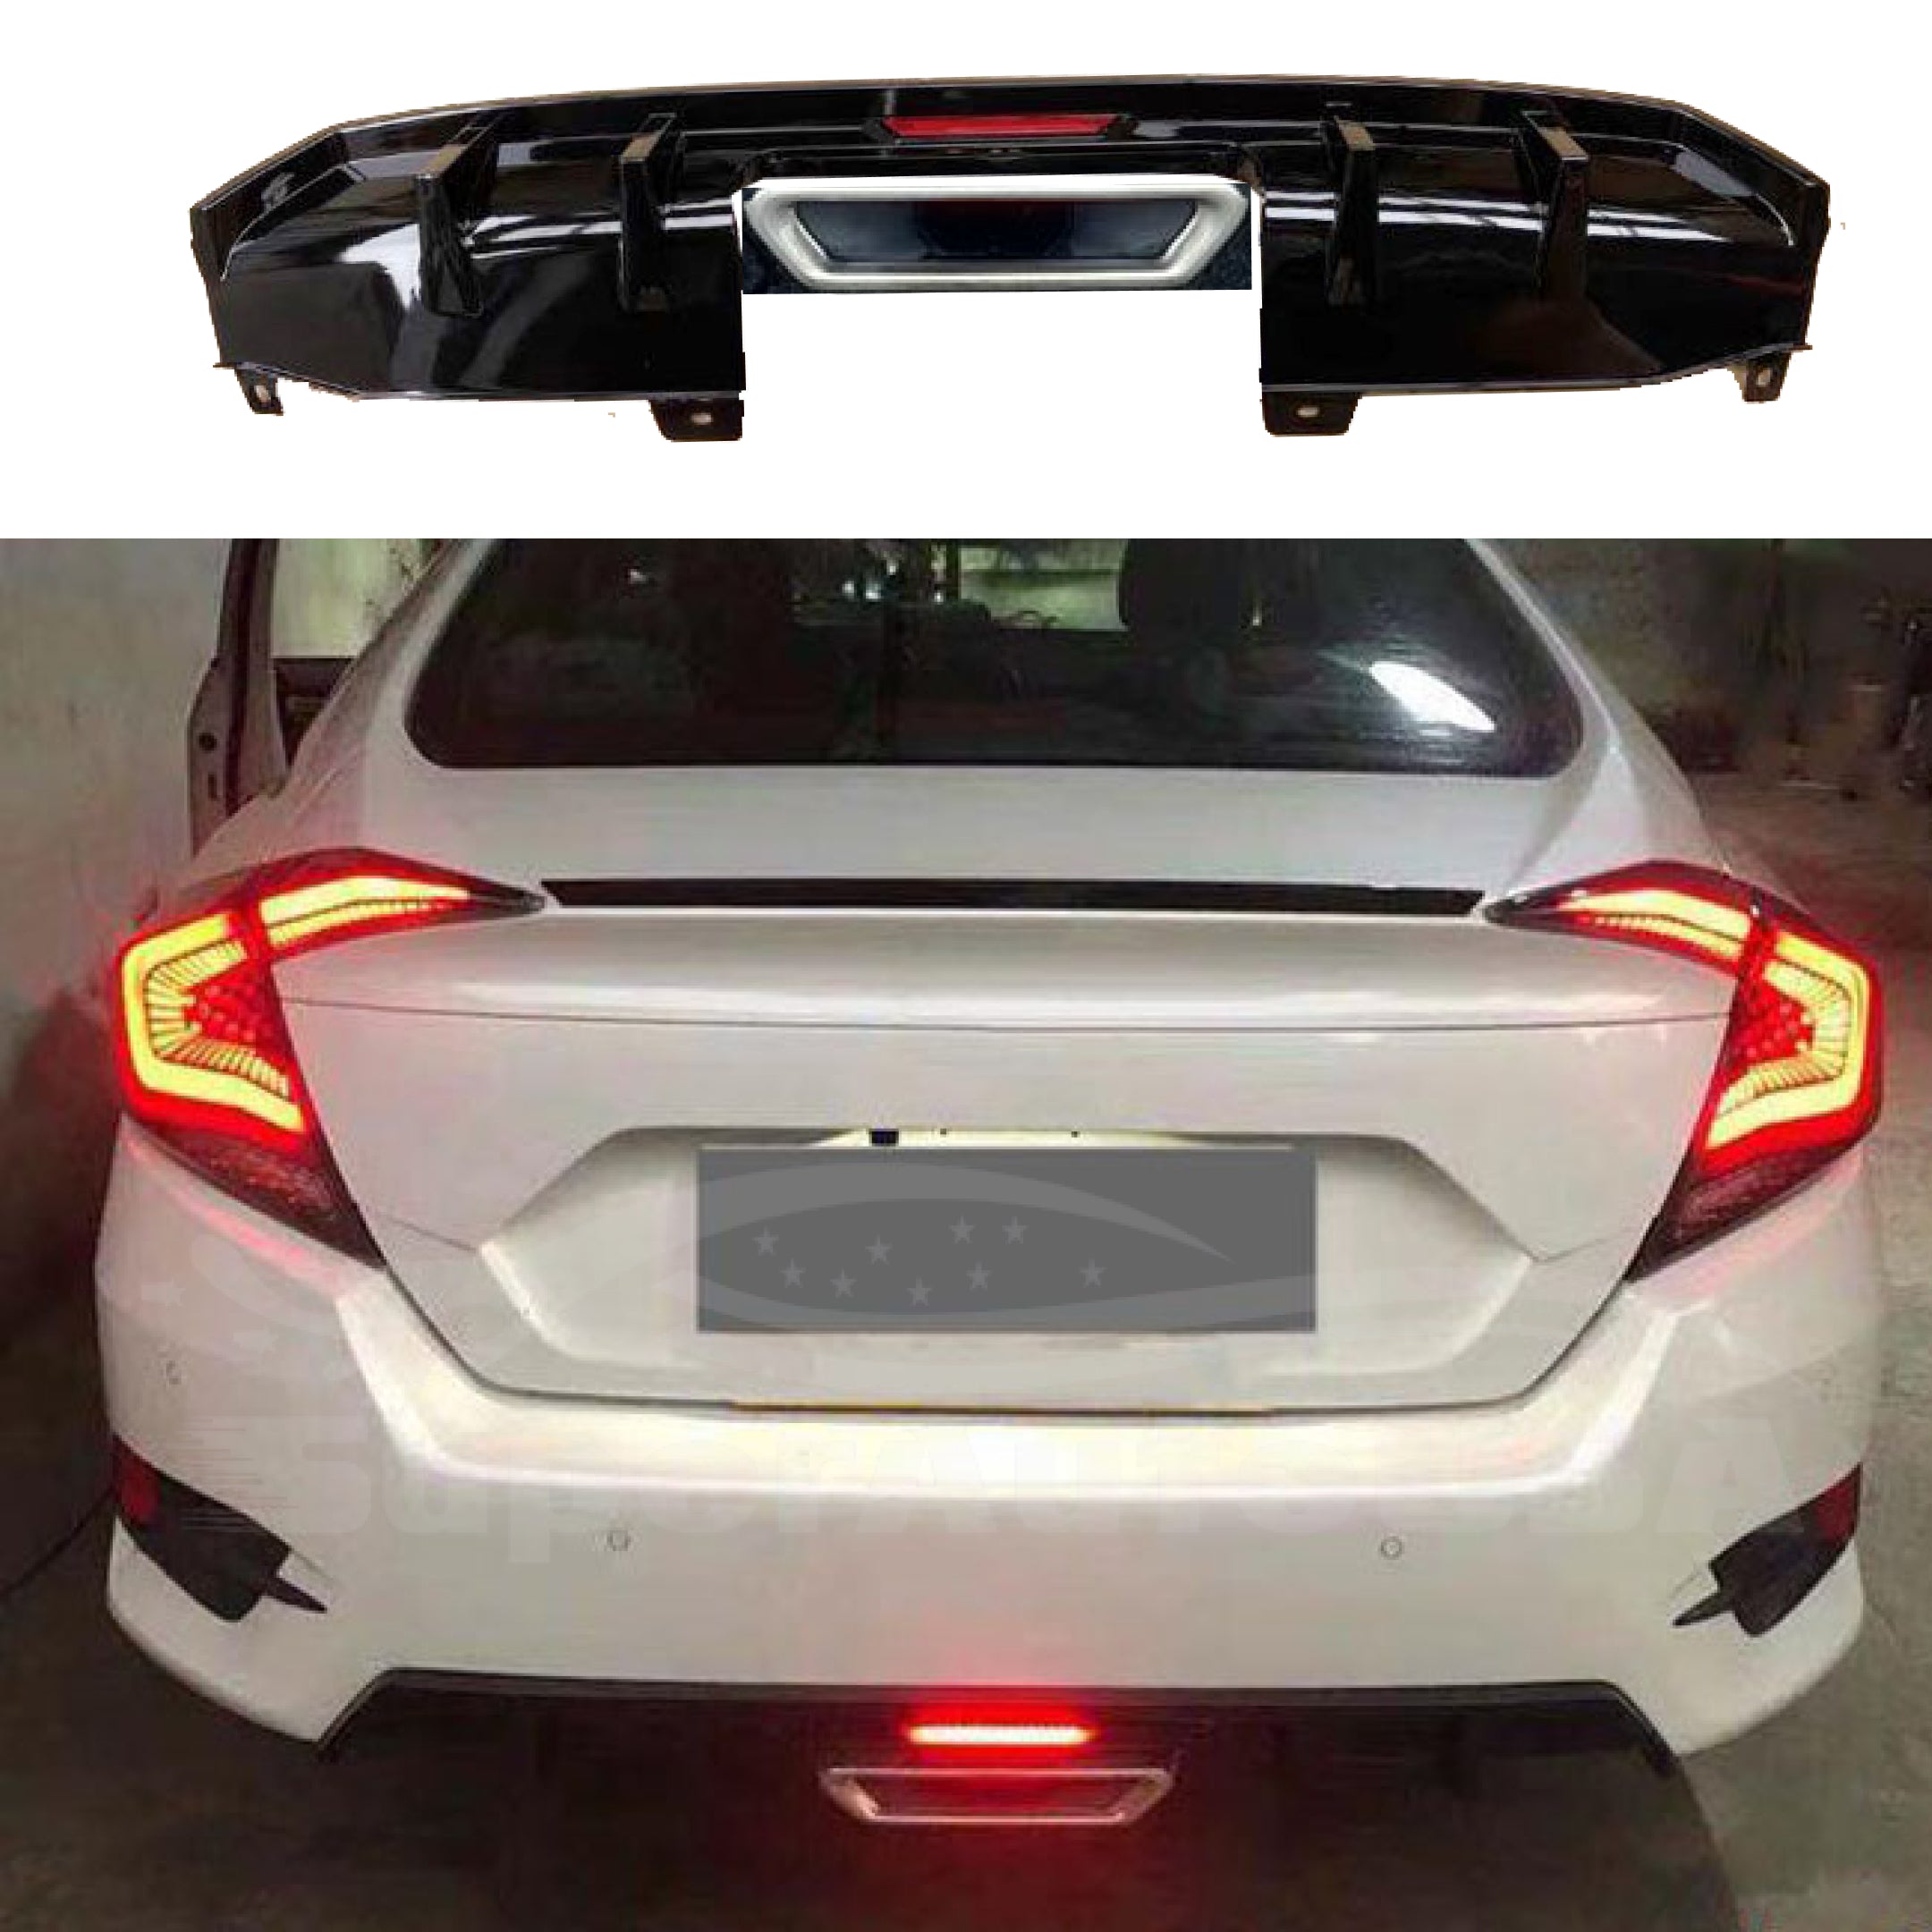 Se adapta a 2016-2021 Honda Civic Sport Sedan parachoques trasero alerón difusor LED luz